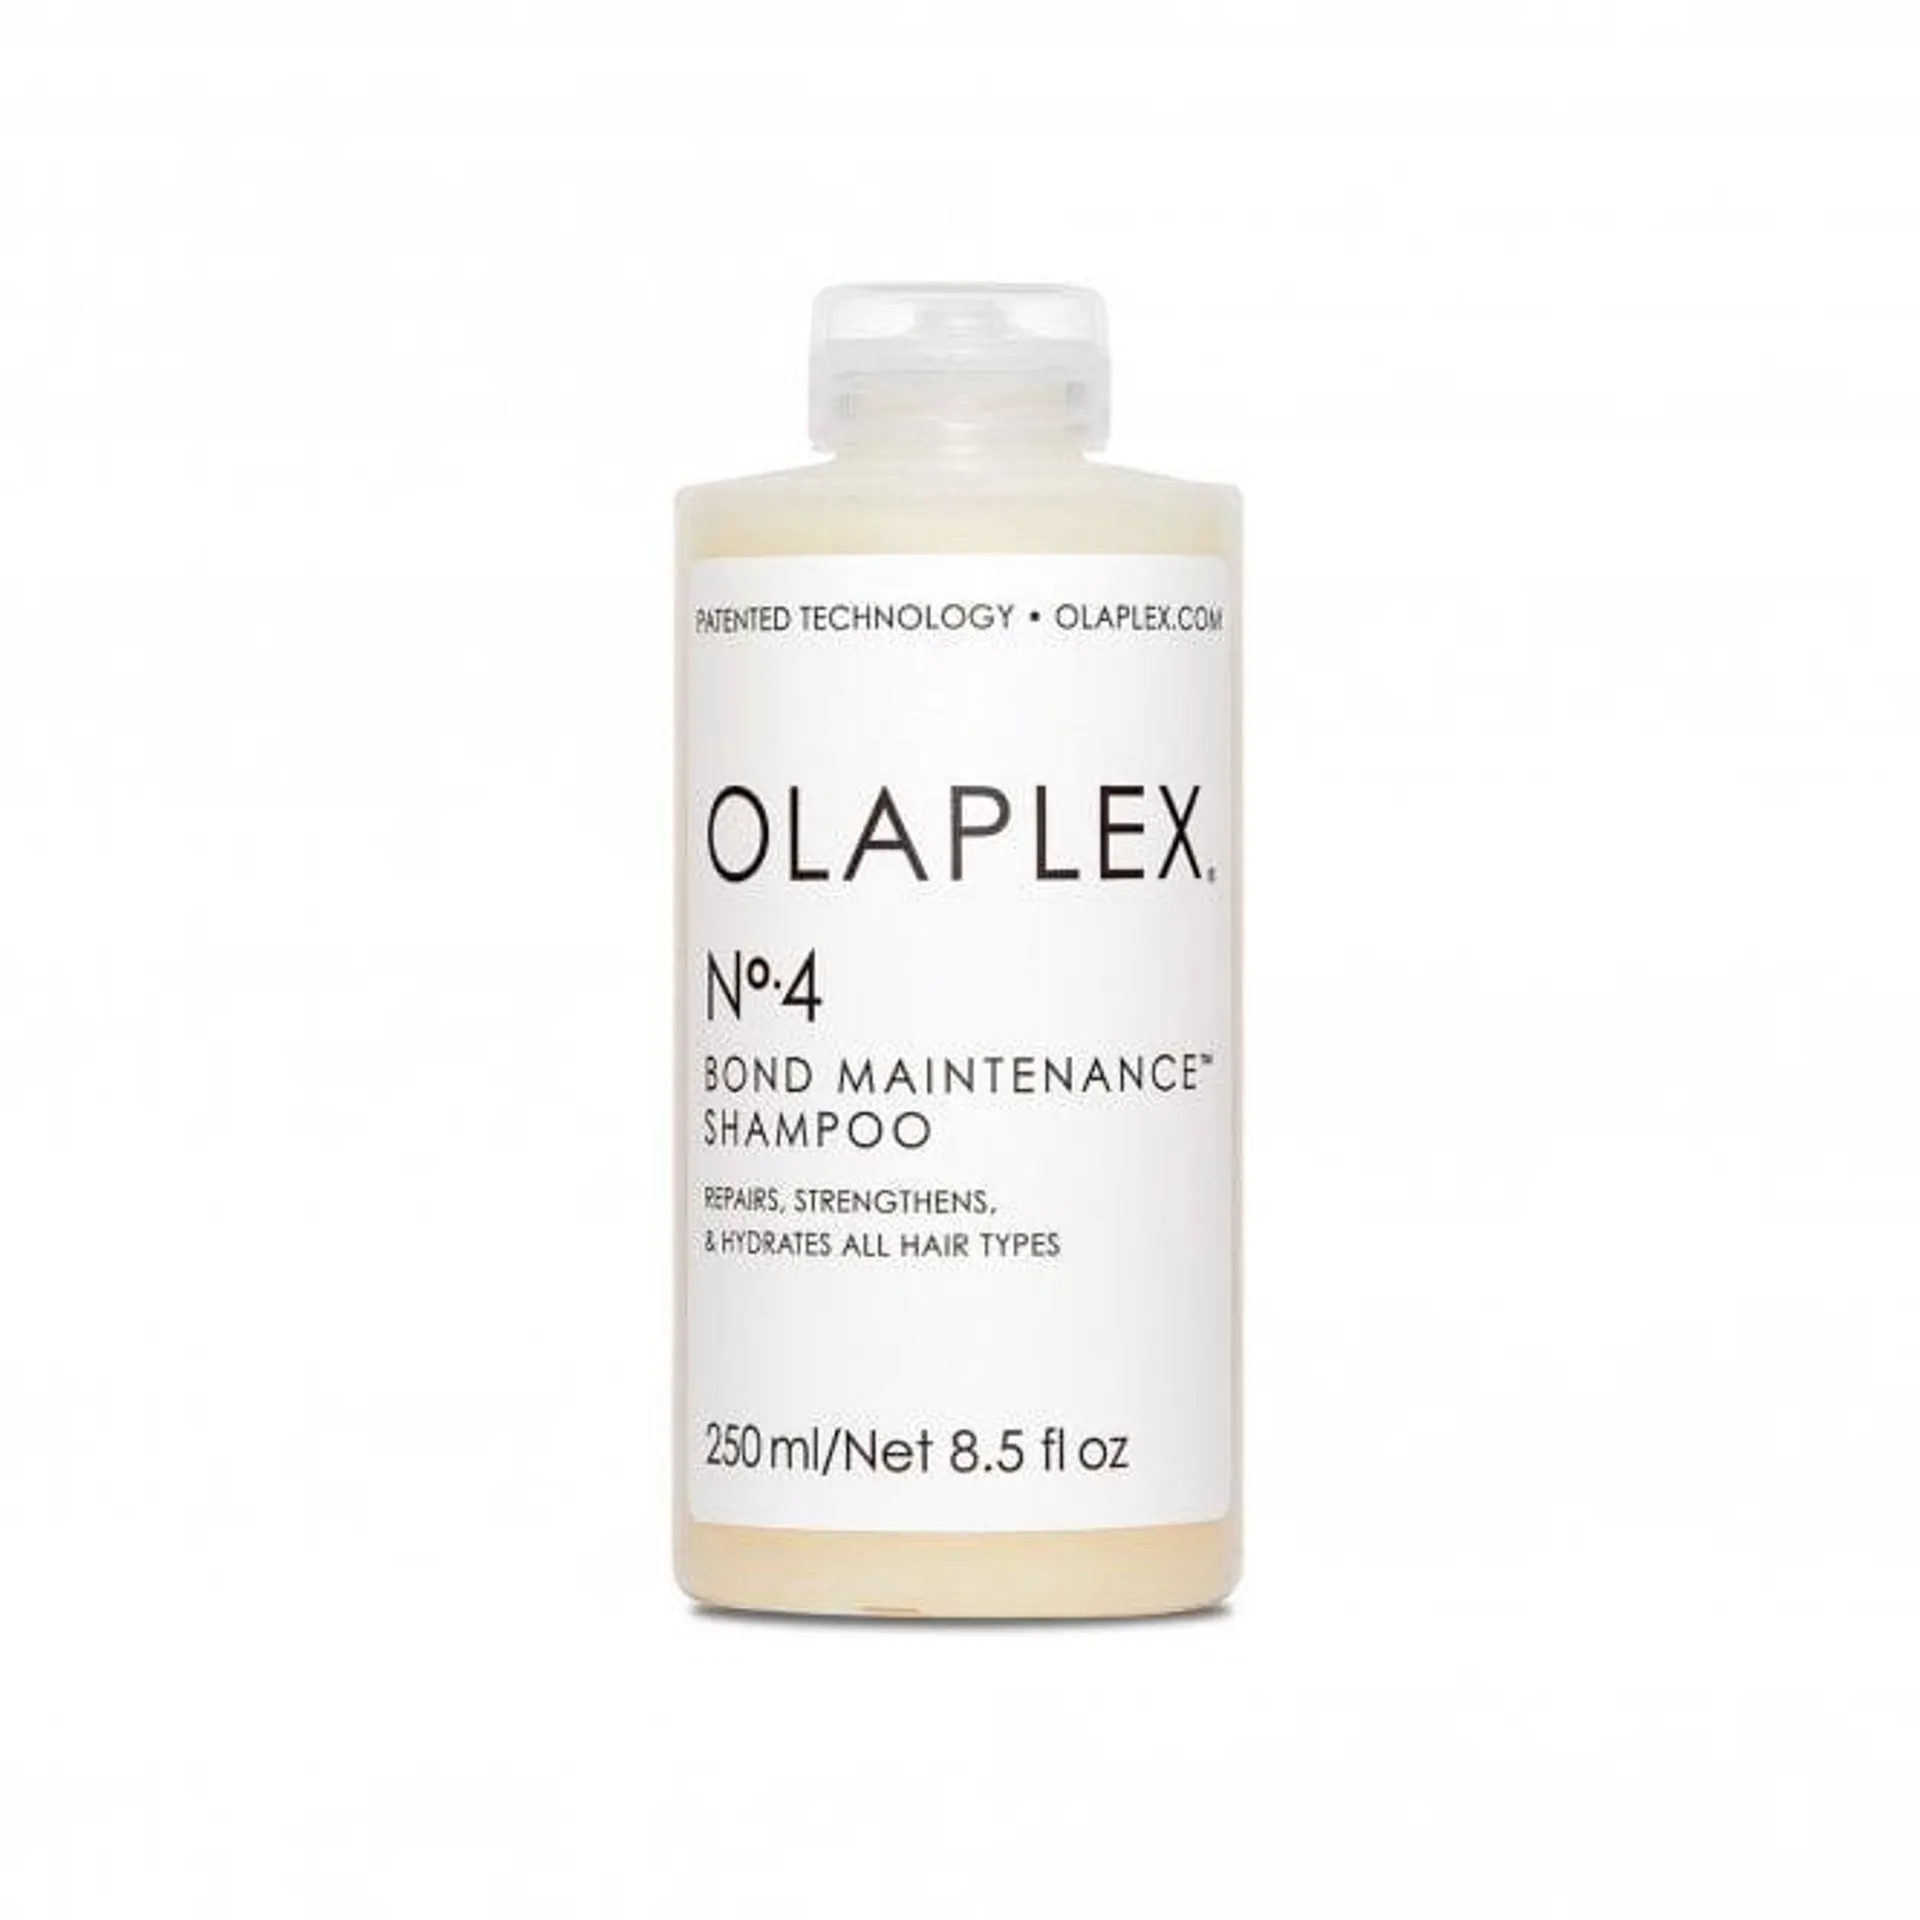 OLAPLEX No.4 Bond Maintenance Shampoo 250ml Bottle